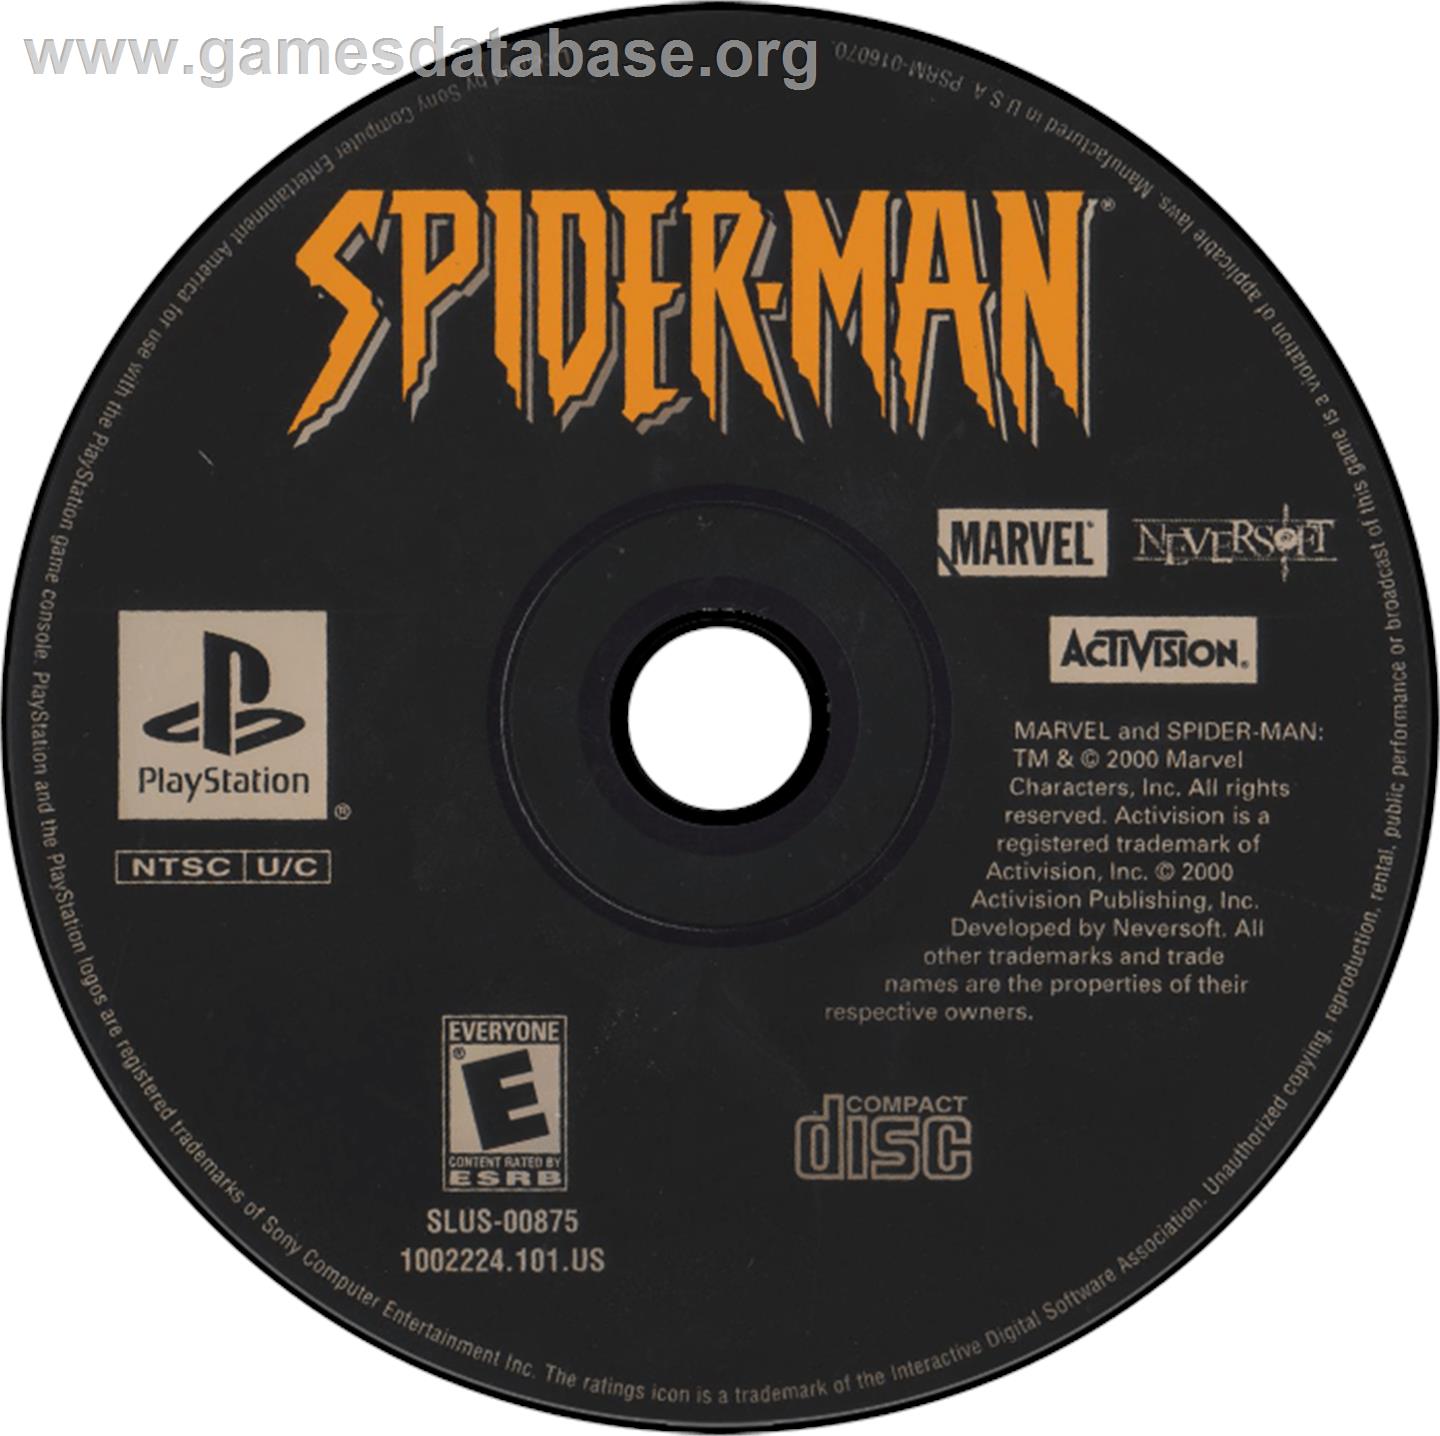 Spider-Man - Sony Playstation - Artwork - Disc